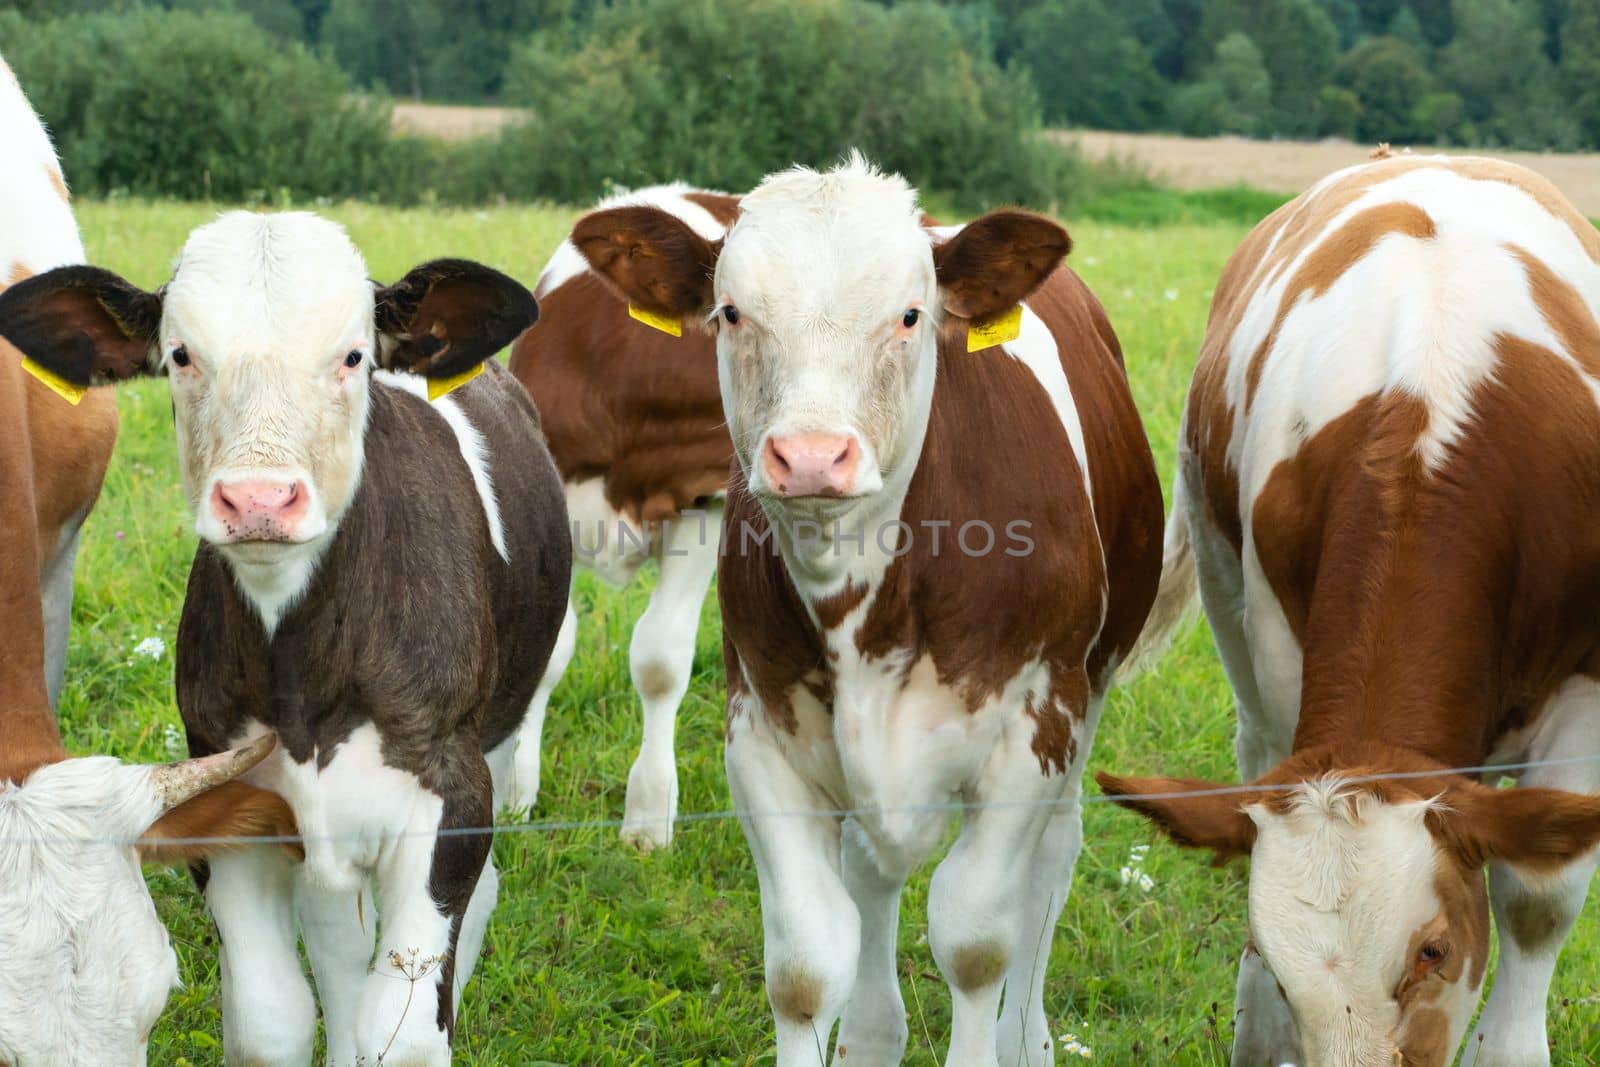 Two cow calves in a herd in the meadow by darekb22